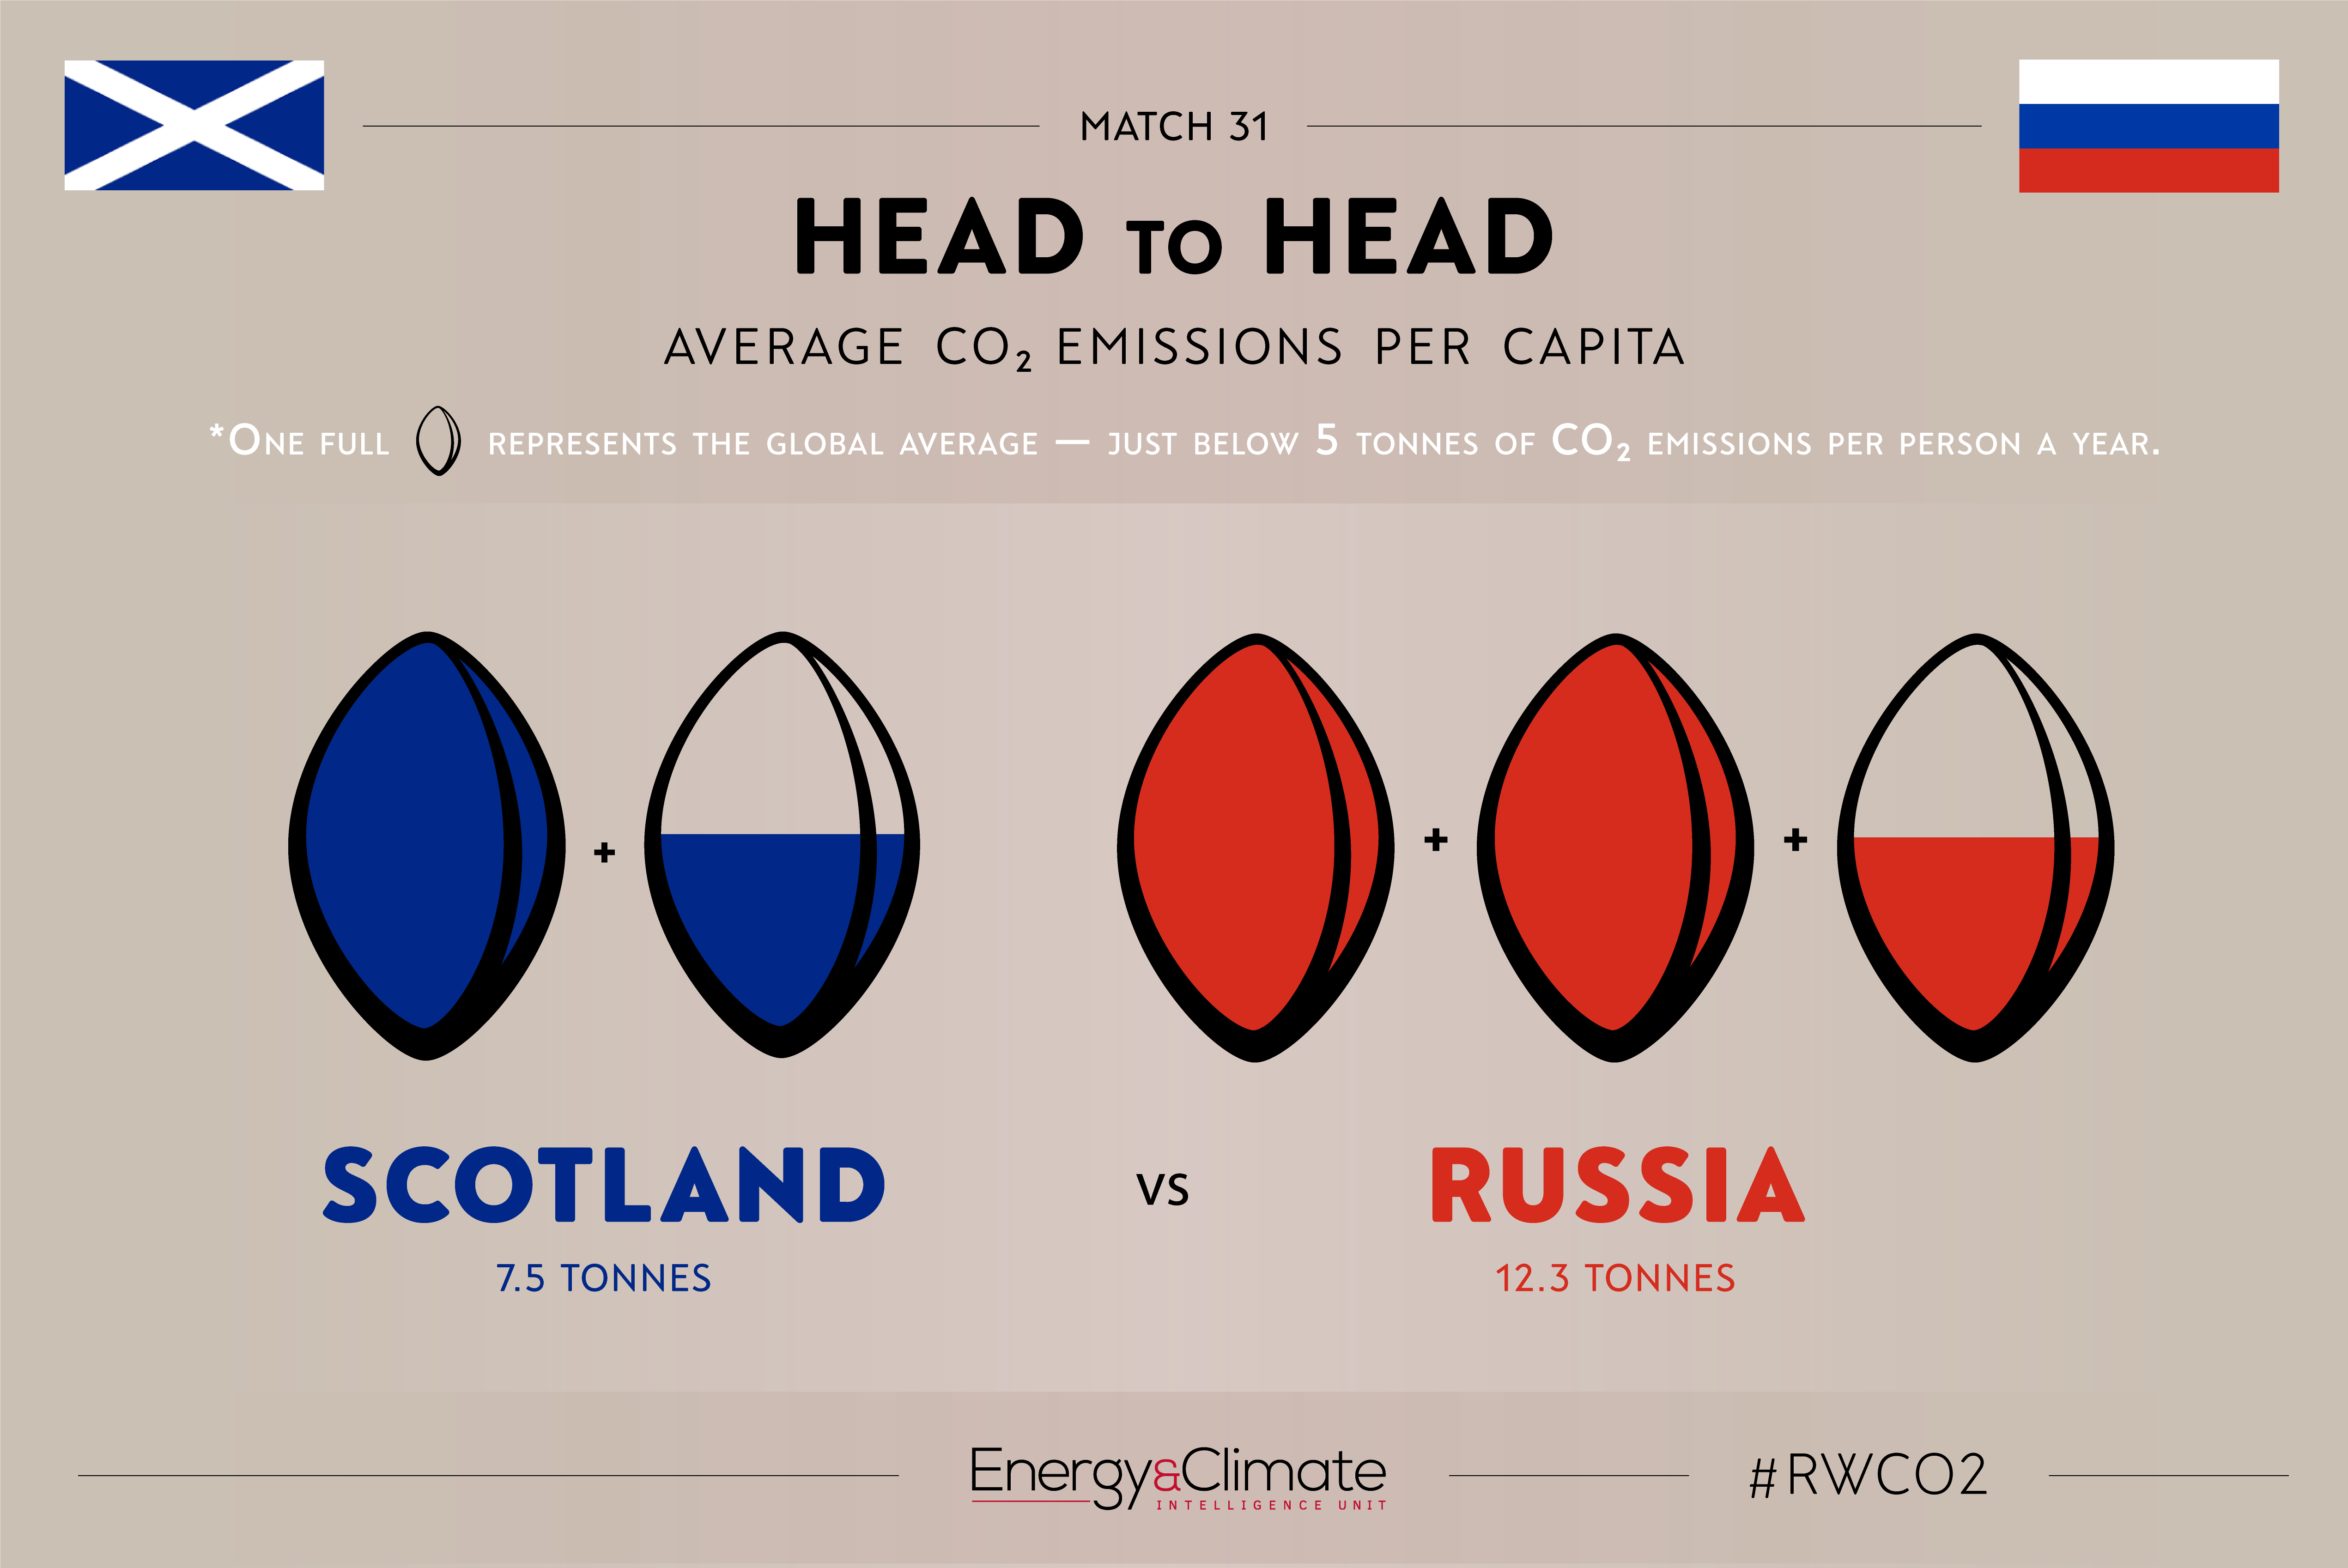 Scotland vs Russia - per capita emissions